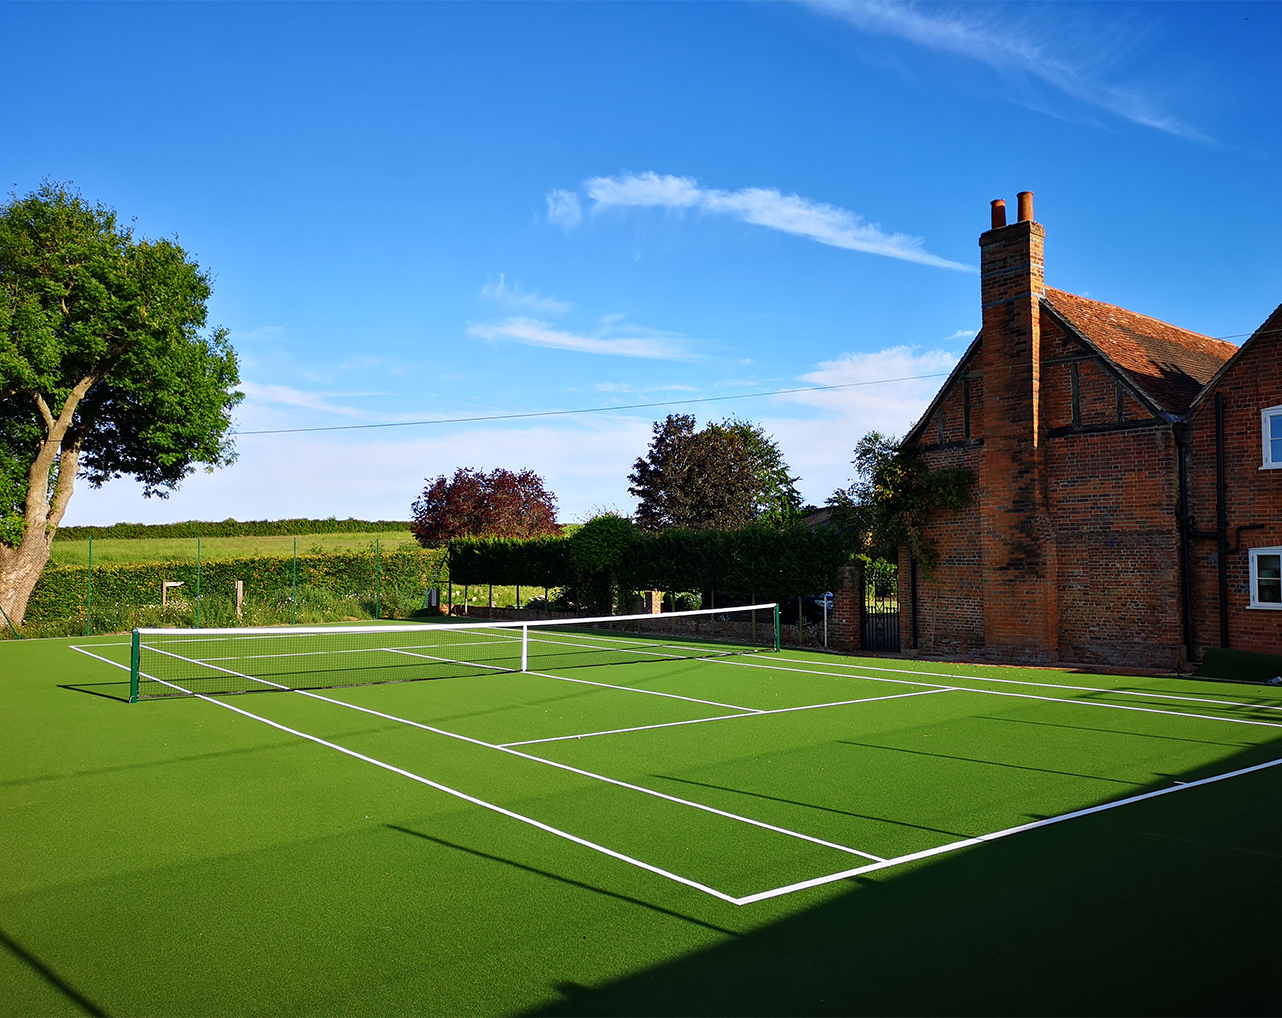 New tennis court